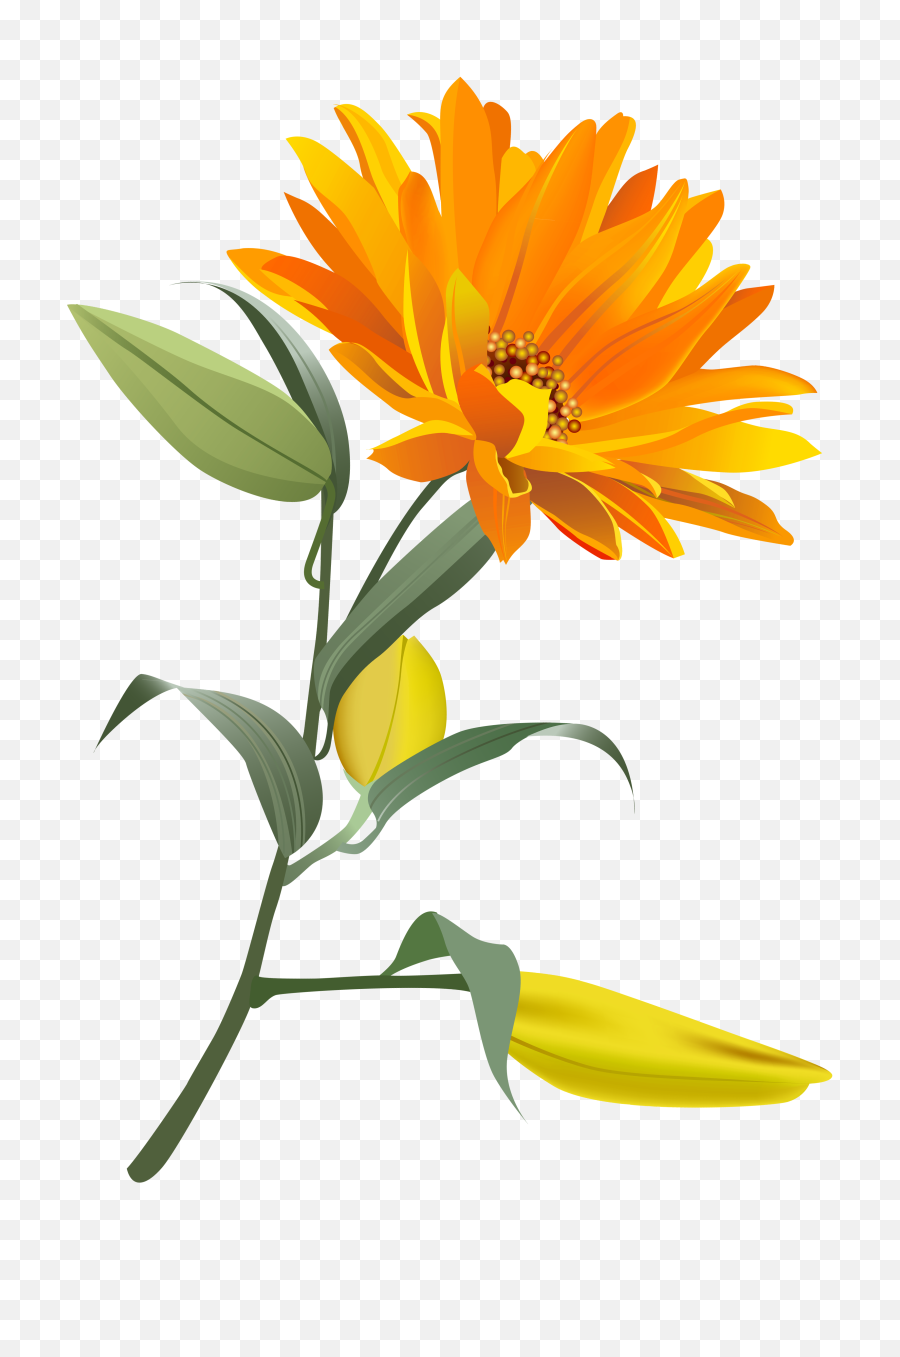 Free Png Download Orange Flower Images Background - Orange Flower Clipart,Yellow Flower Transparent Background